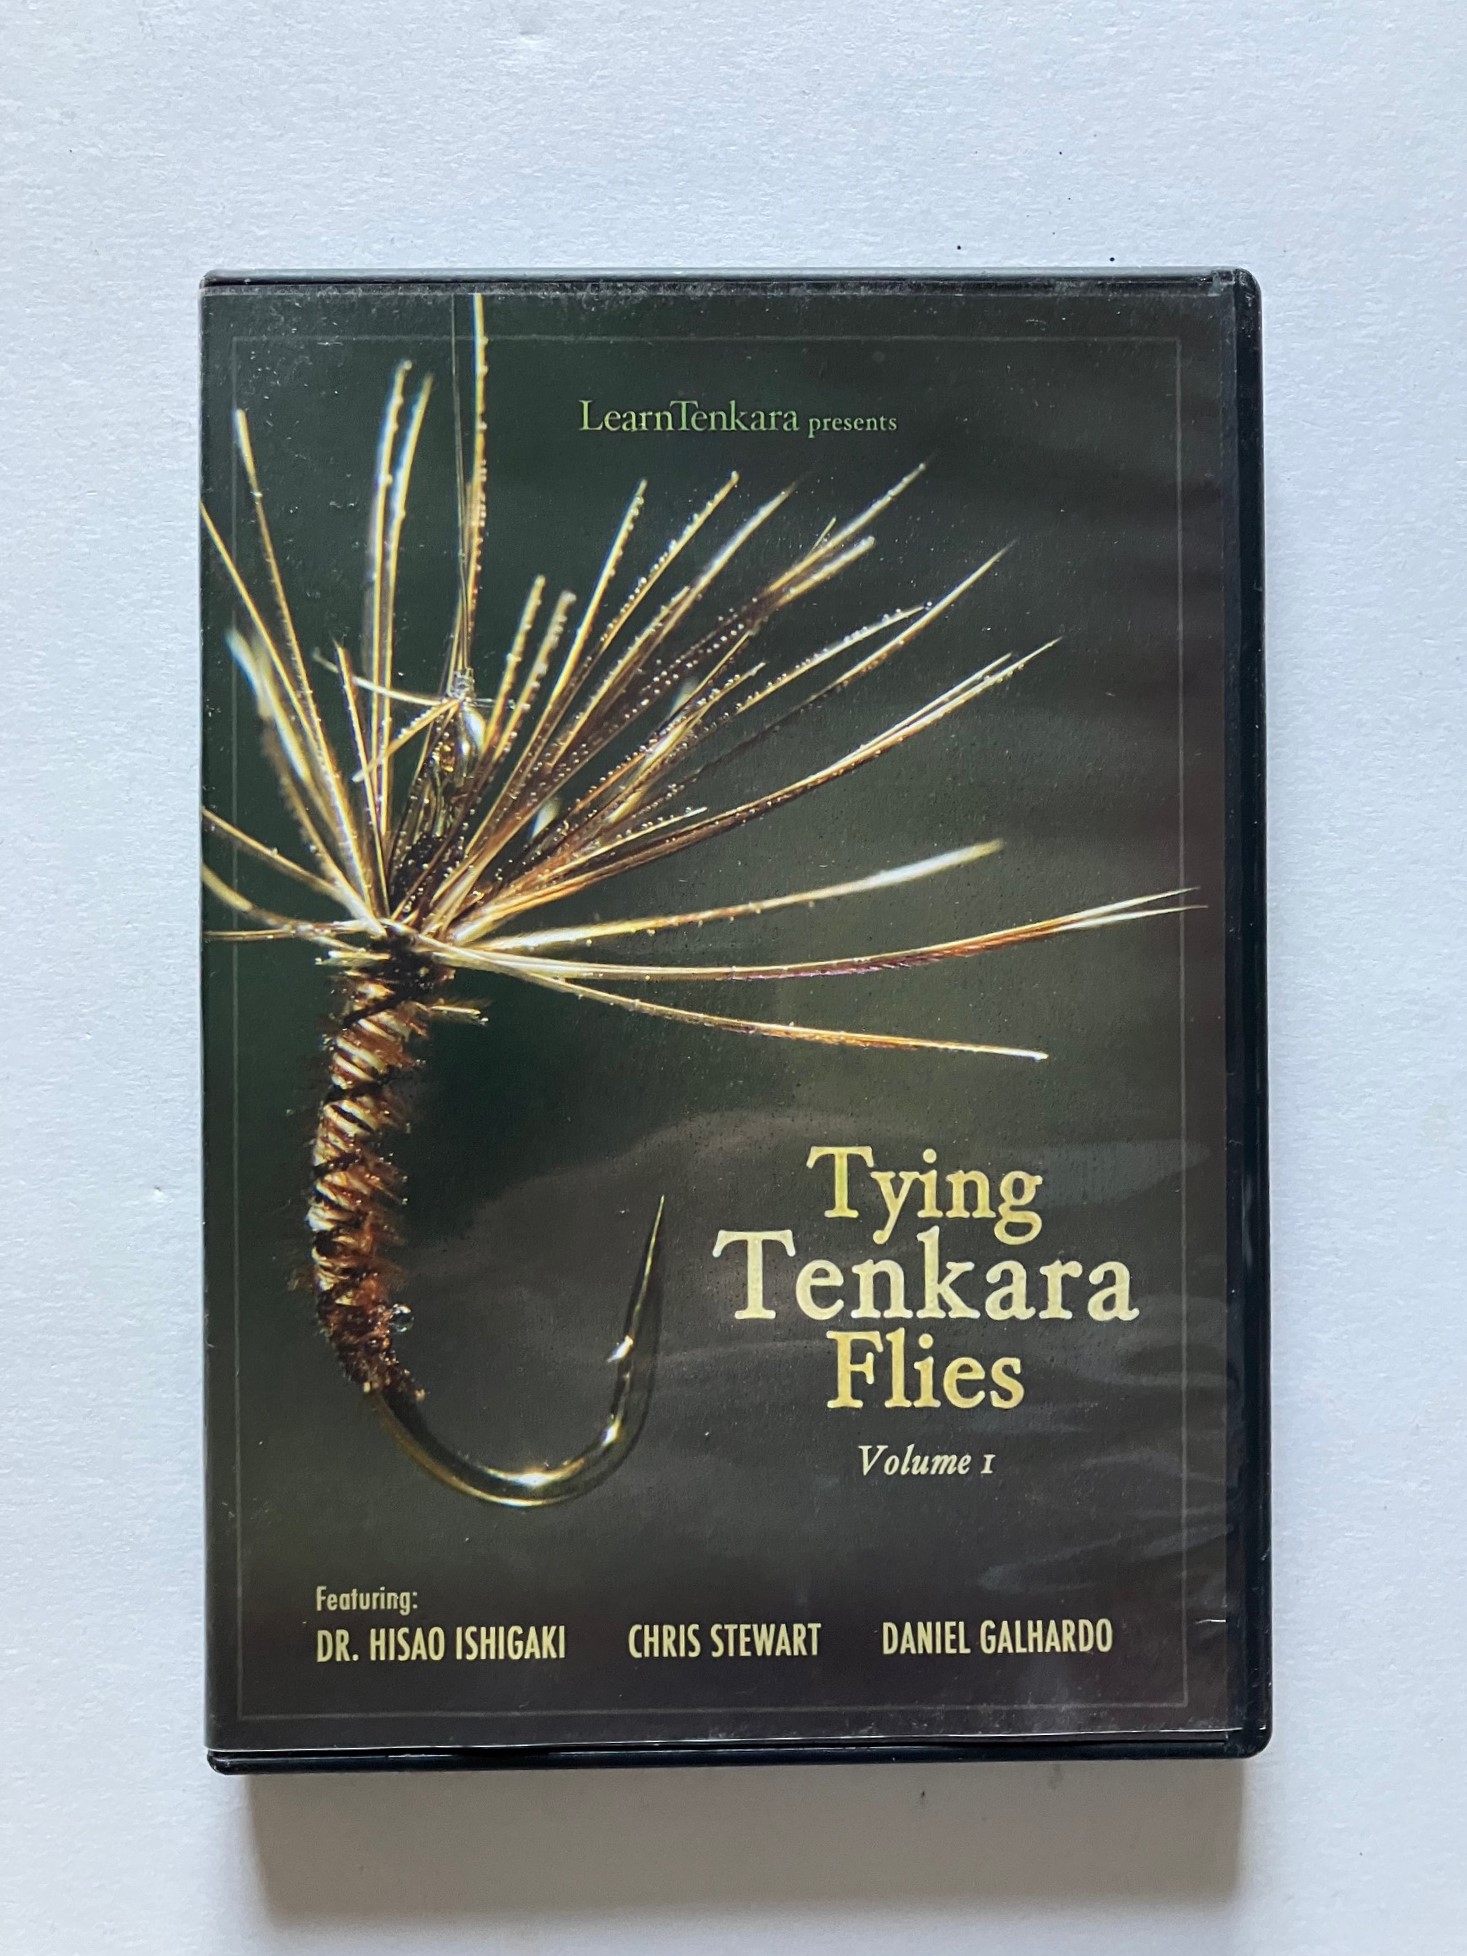 Tying Tenkara Flies Vol1 DVD